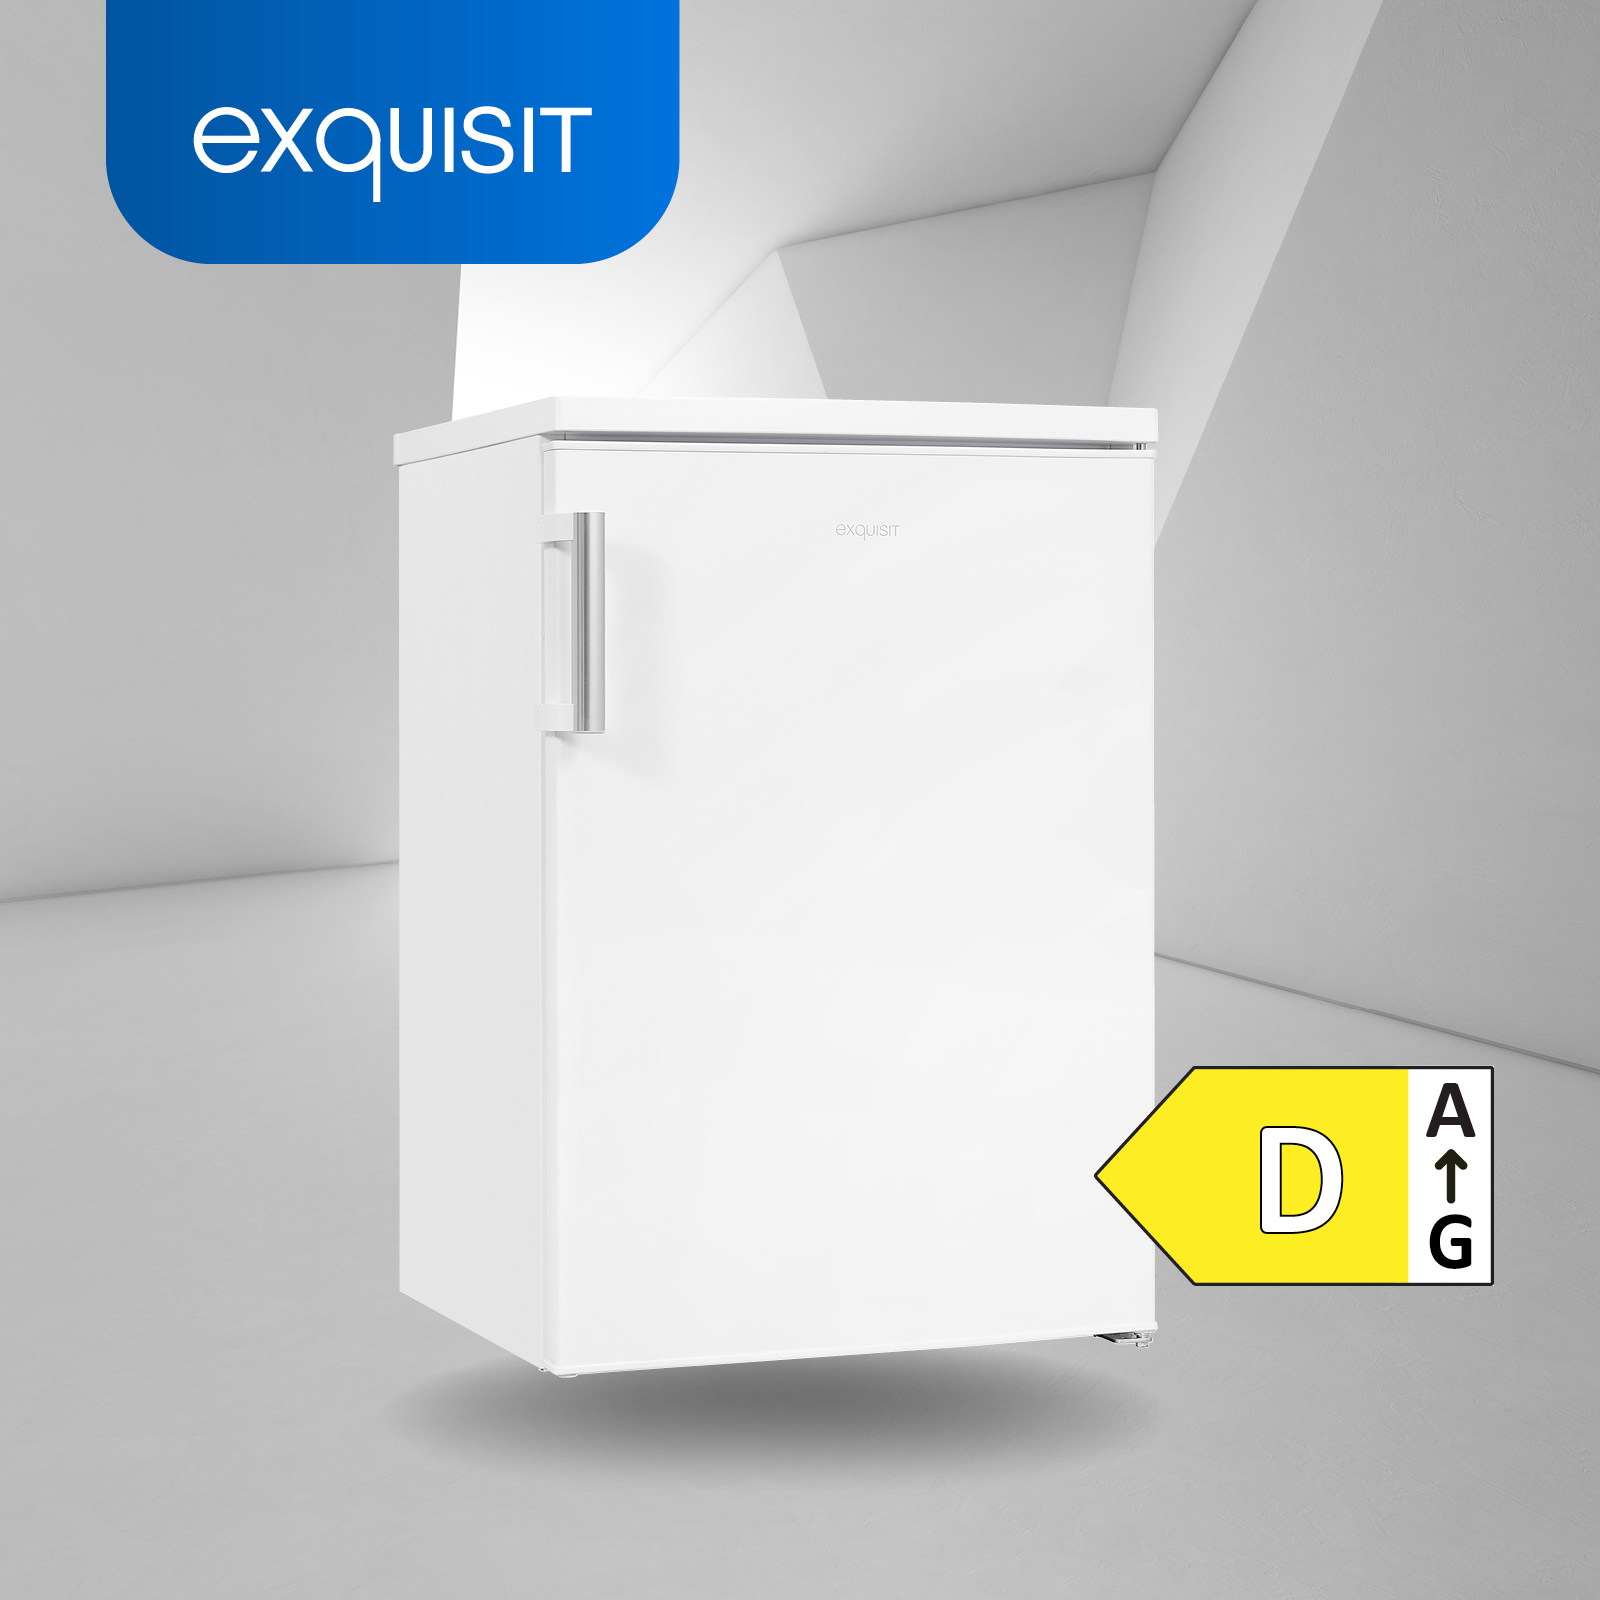 EXQUISIT KS16-V-H-010D weiss Kühlschrank Weiß) kWh, hoch, (72,37 D, mm 850